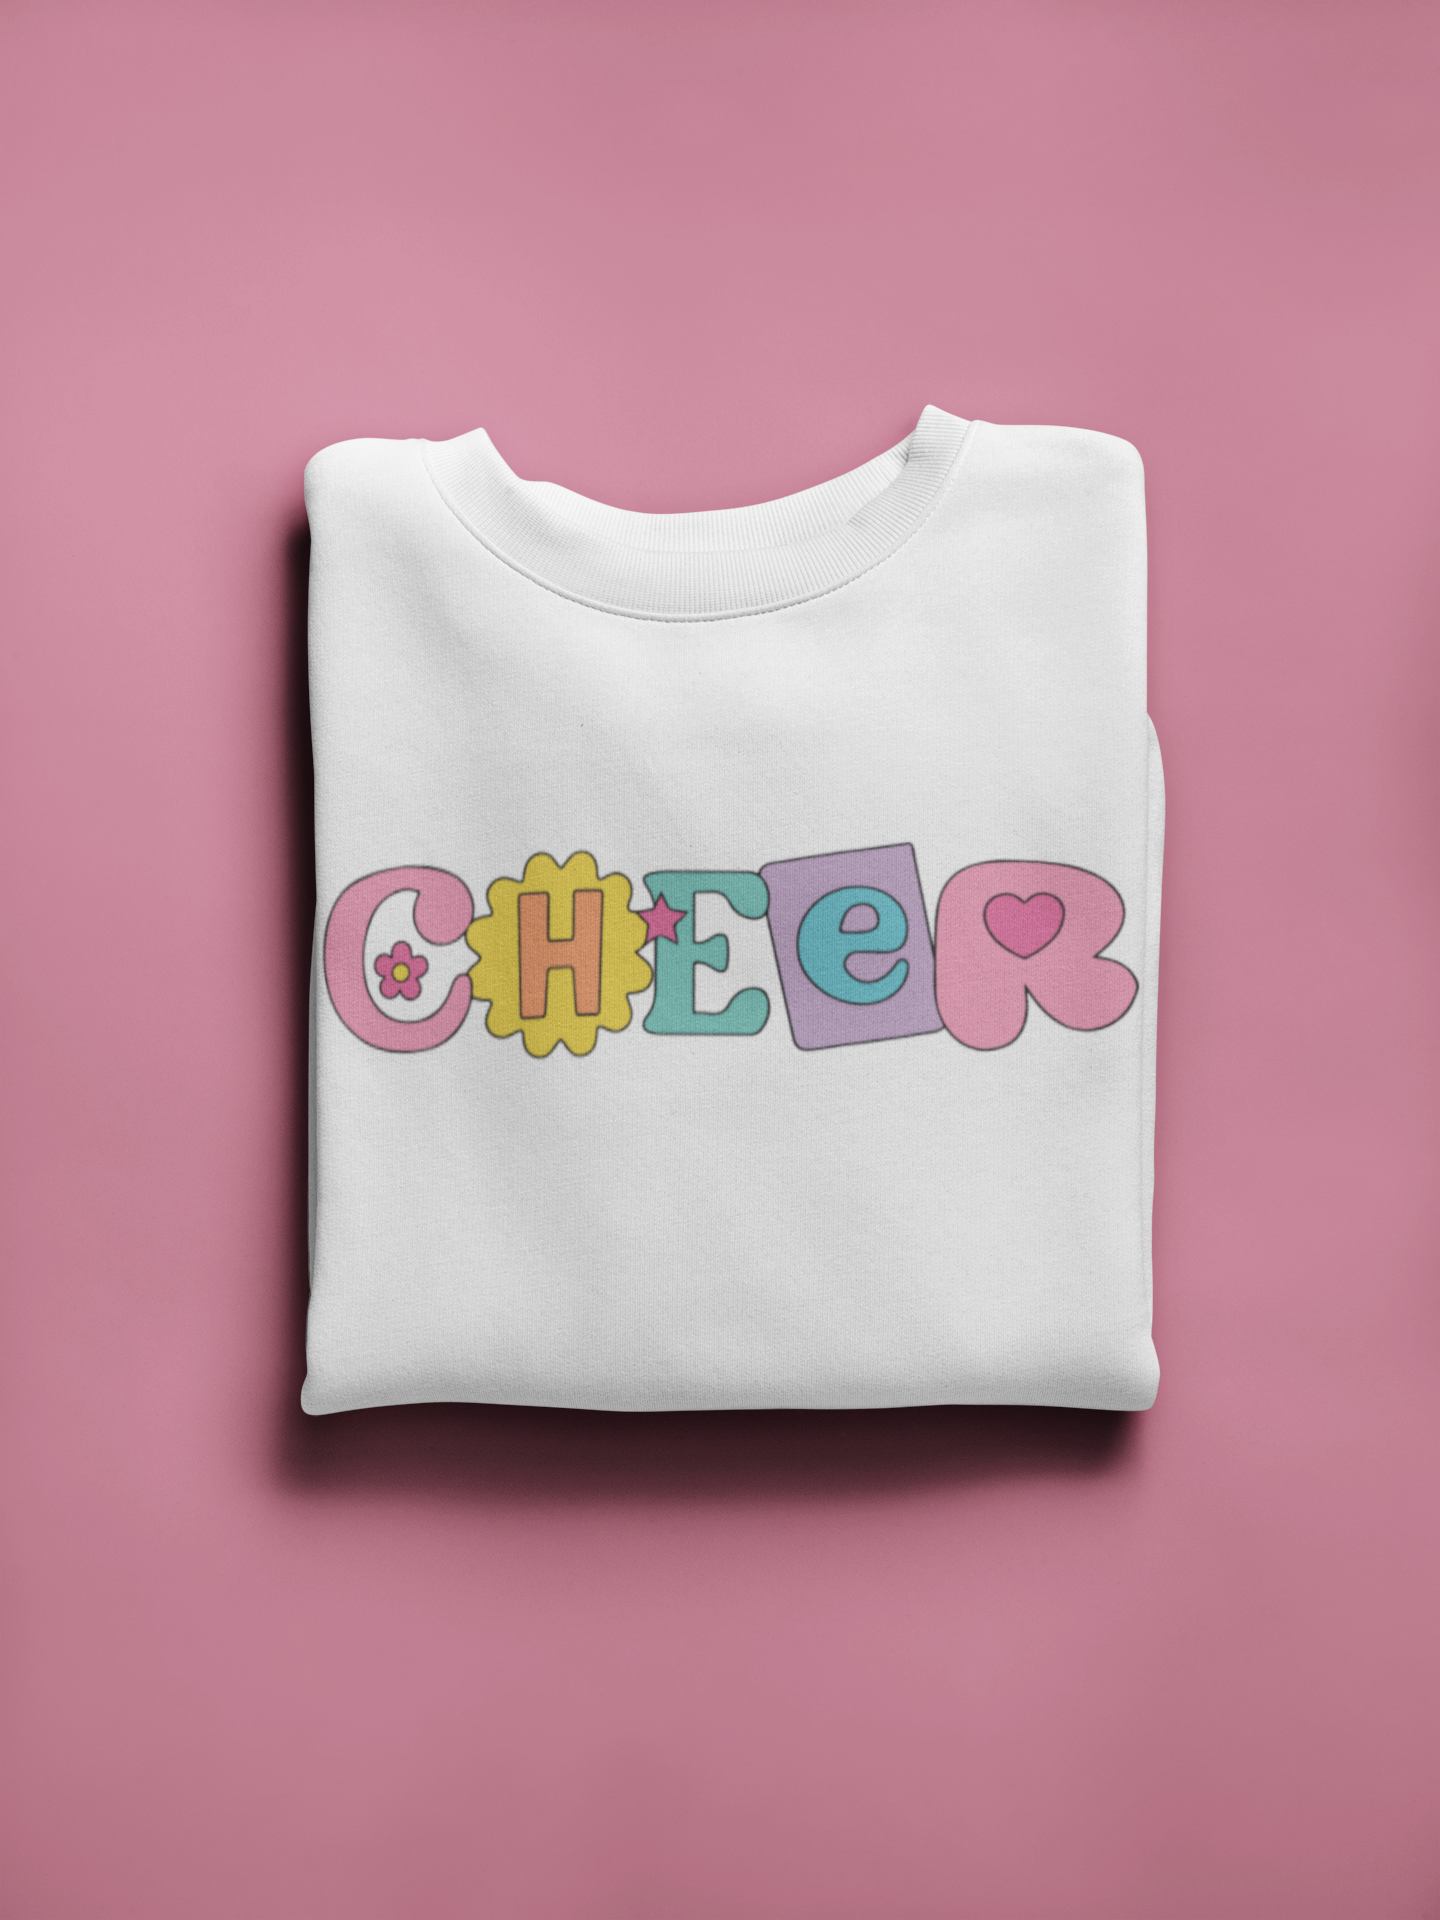 Cheer Fun Cheerleader Digital Download Design File